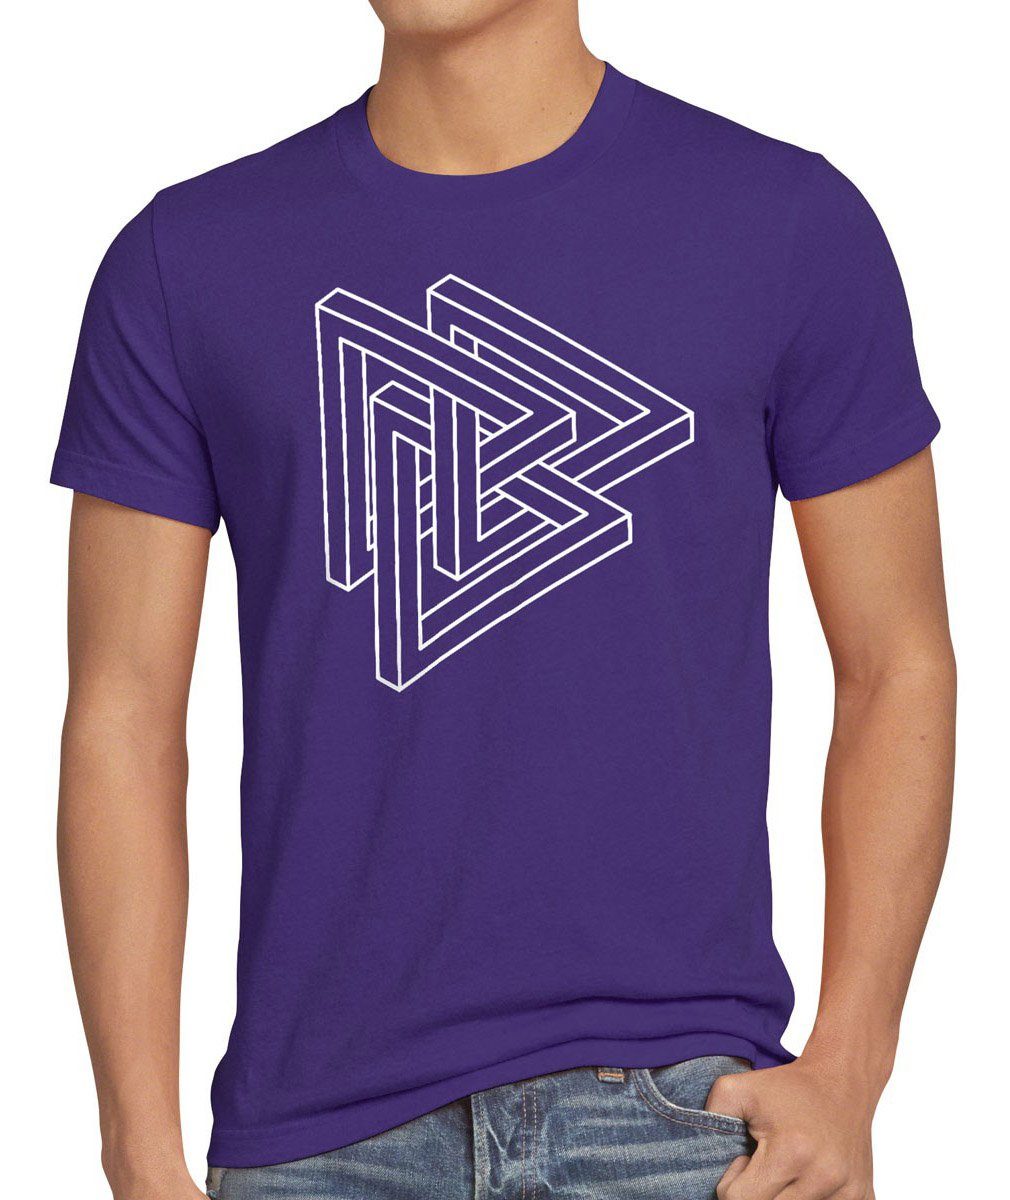 style3 Print-Shirt Herren T-Shirt Penrose Big Bang Sheldon Escher Cooper Dreieck Würfel Theory geo lila